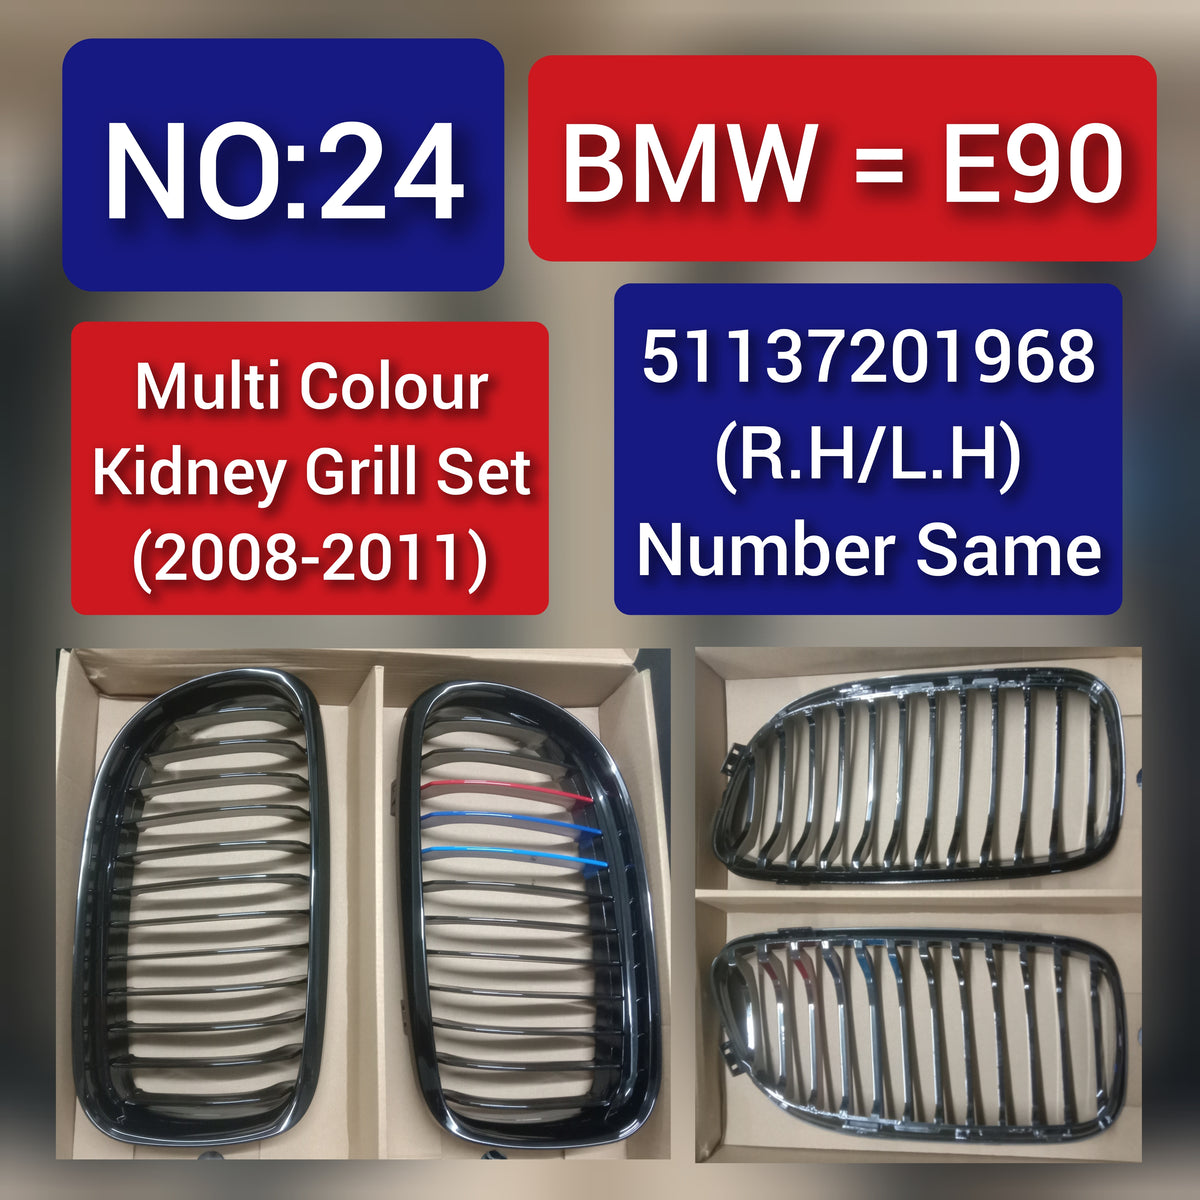 BMW = E90 Multi Colour Kidney Grill Set (2008-2011) 51137201968 (R.H/L.H) Number Same Tag 24